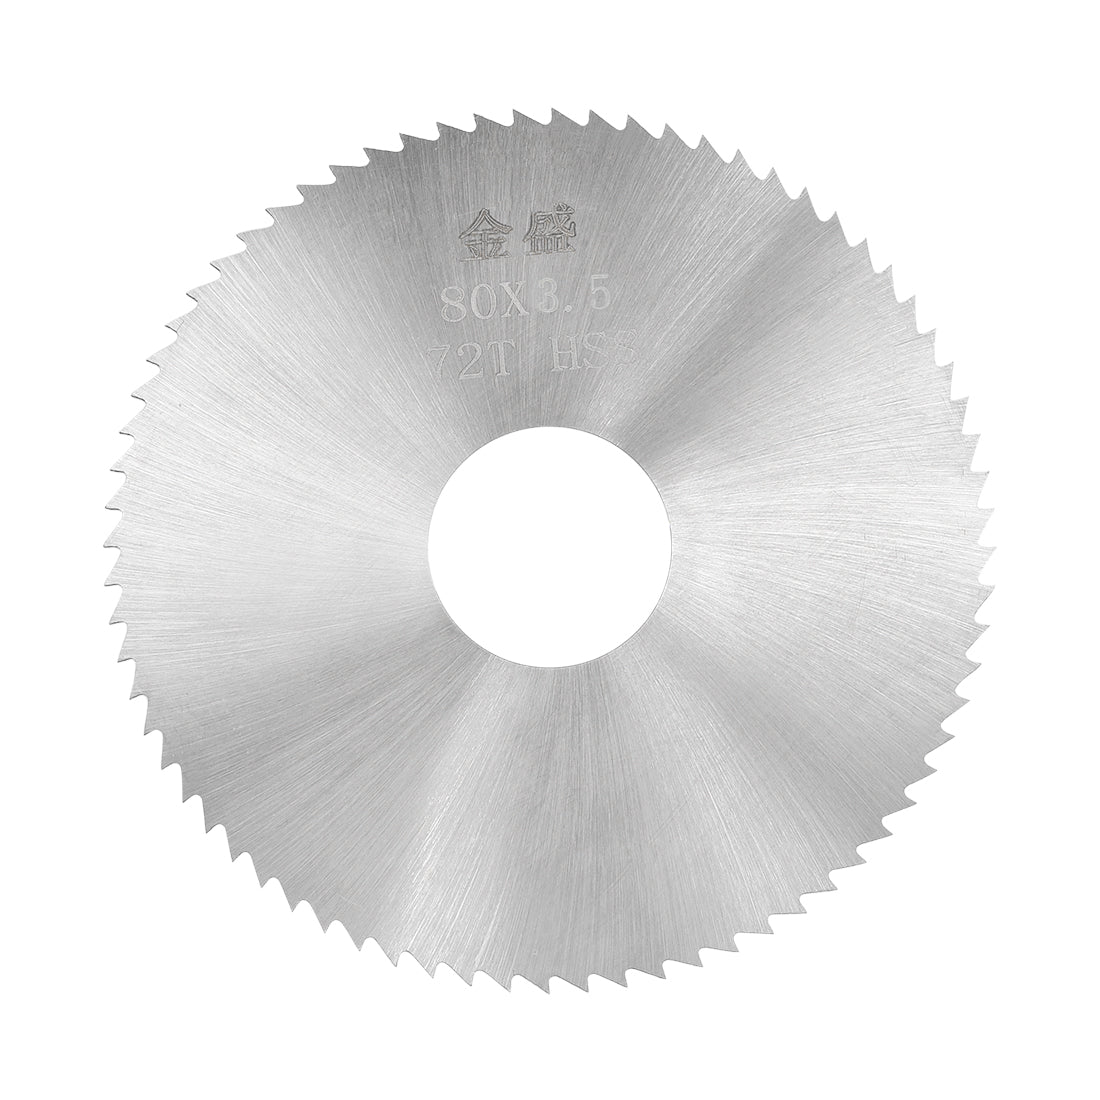 Uxcell Uxcell Circular Saw Blades 60x16x0.4mm 72 Teeth HSS Disc Cutting Blade for Wood Metal